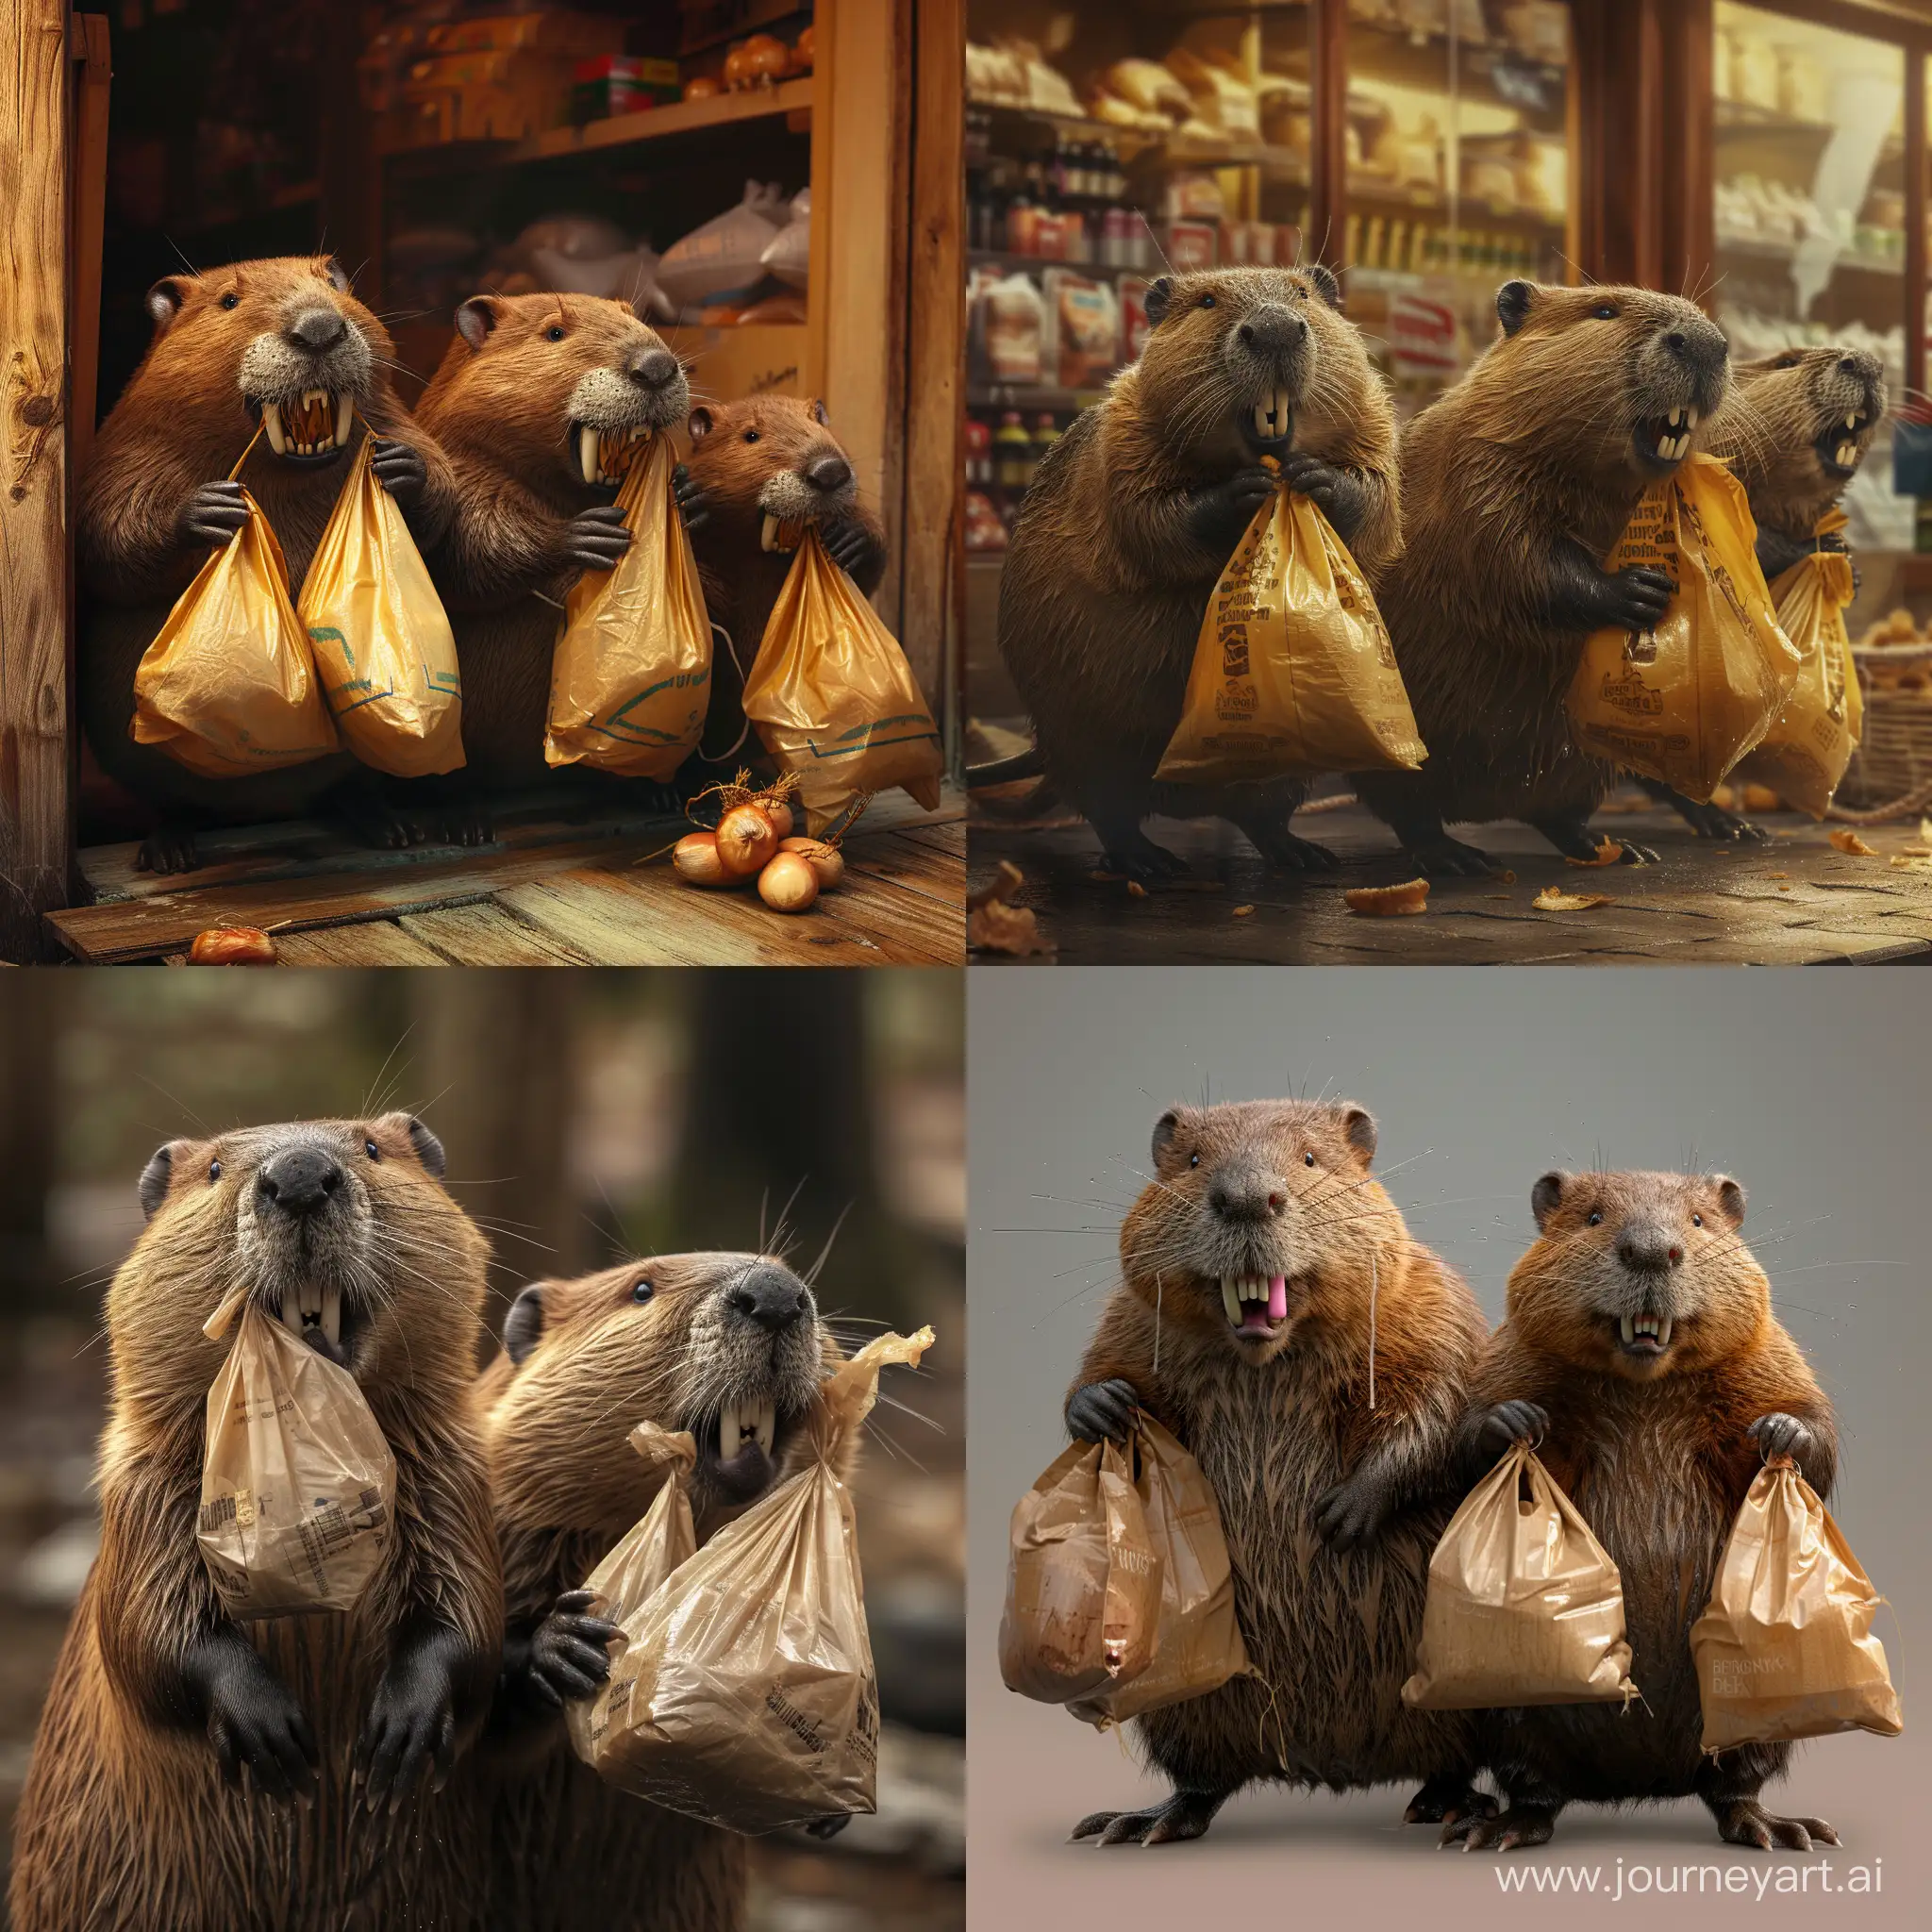 Polish-Beavers-Carrying-Biedronka-Store-Bags-UltraRealistic-4K-Image